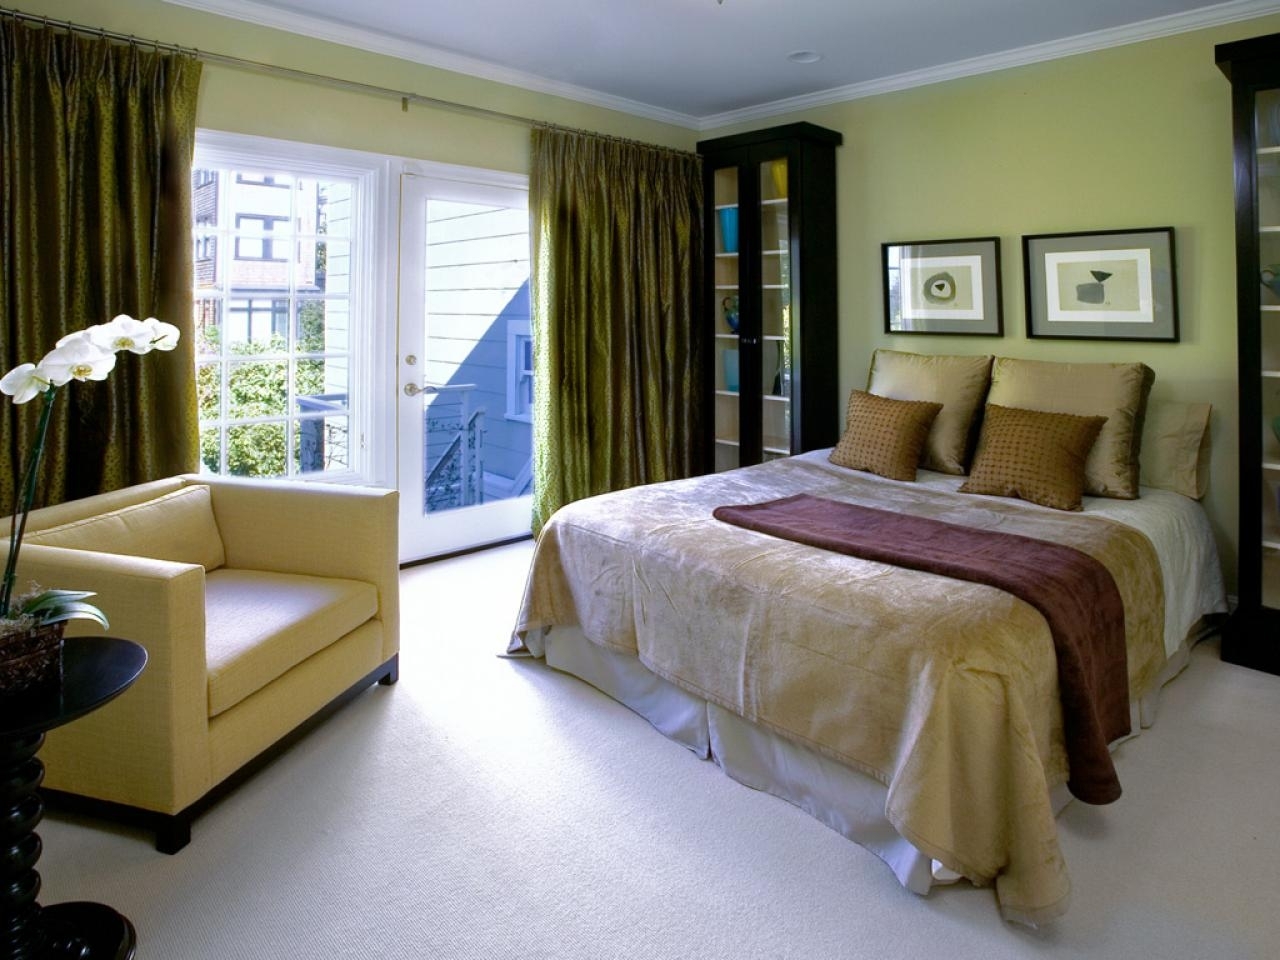 Bedroom Paint Color Ideas Pictures Options Hgtv 8 